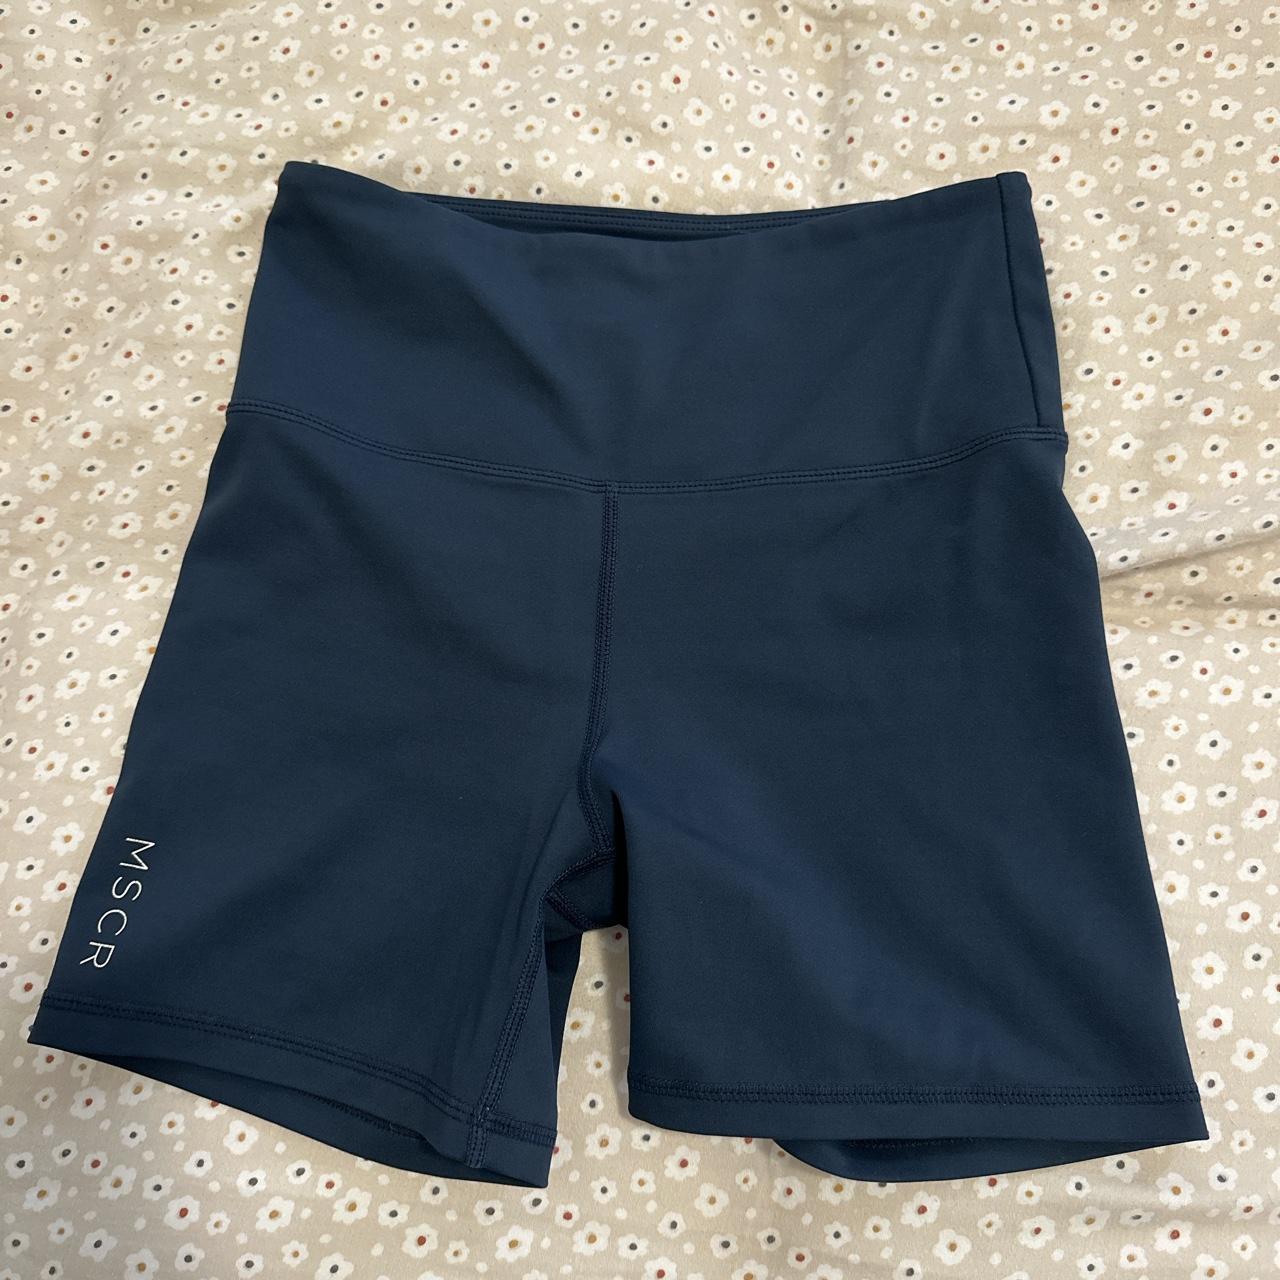 Muscle republic navy shorts - Depop